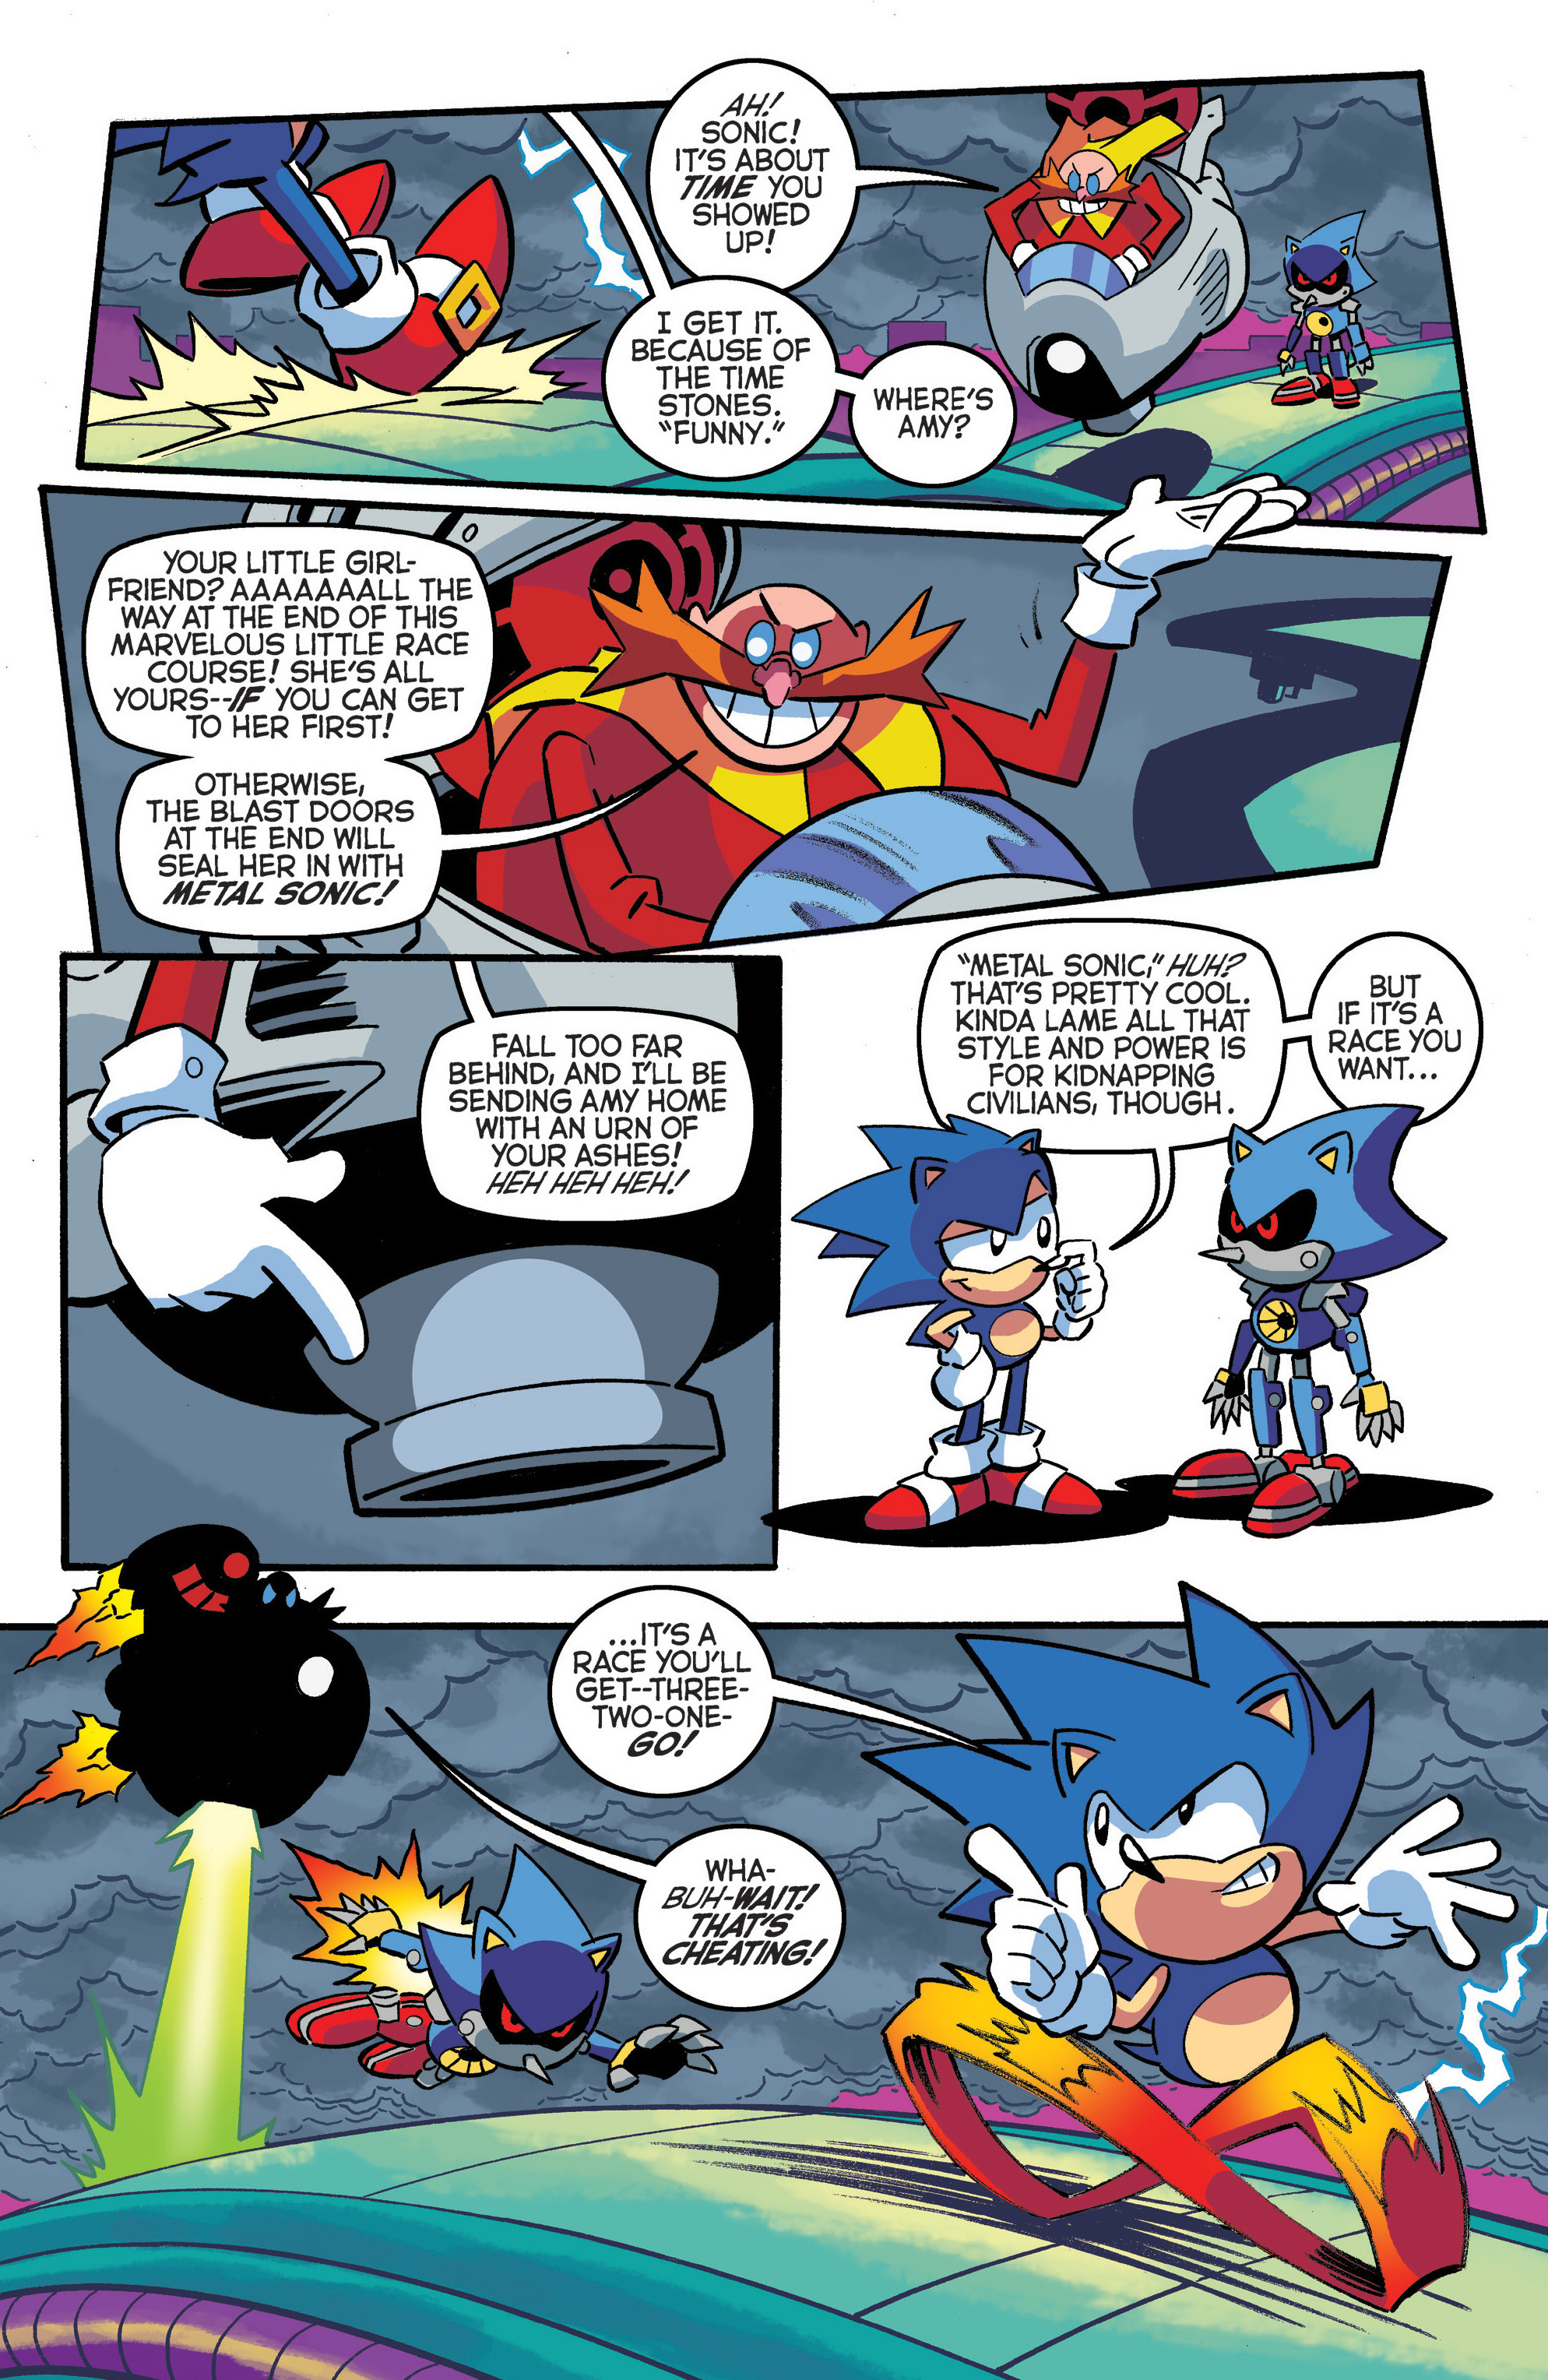 1 HOUR of Sonic 10 Years Later - Sonic Comic Dub MEGA COMP 